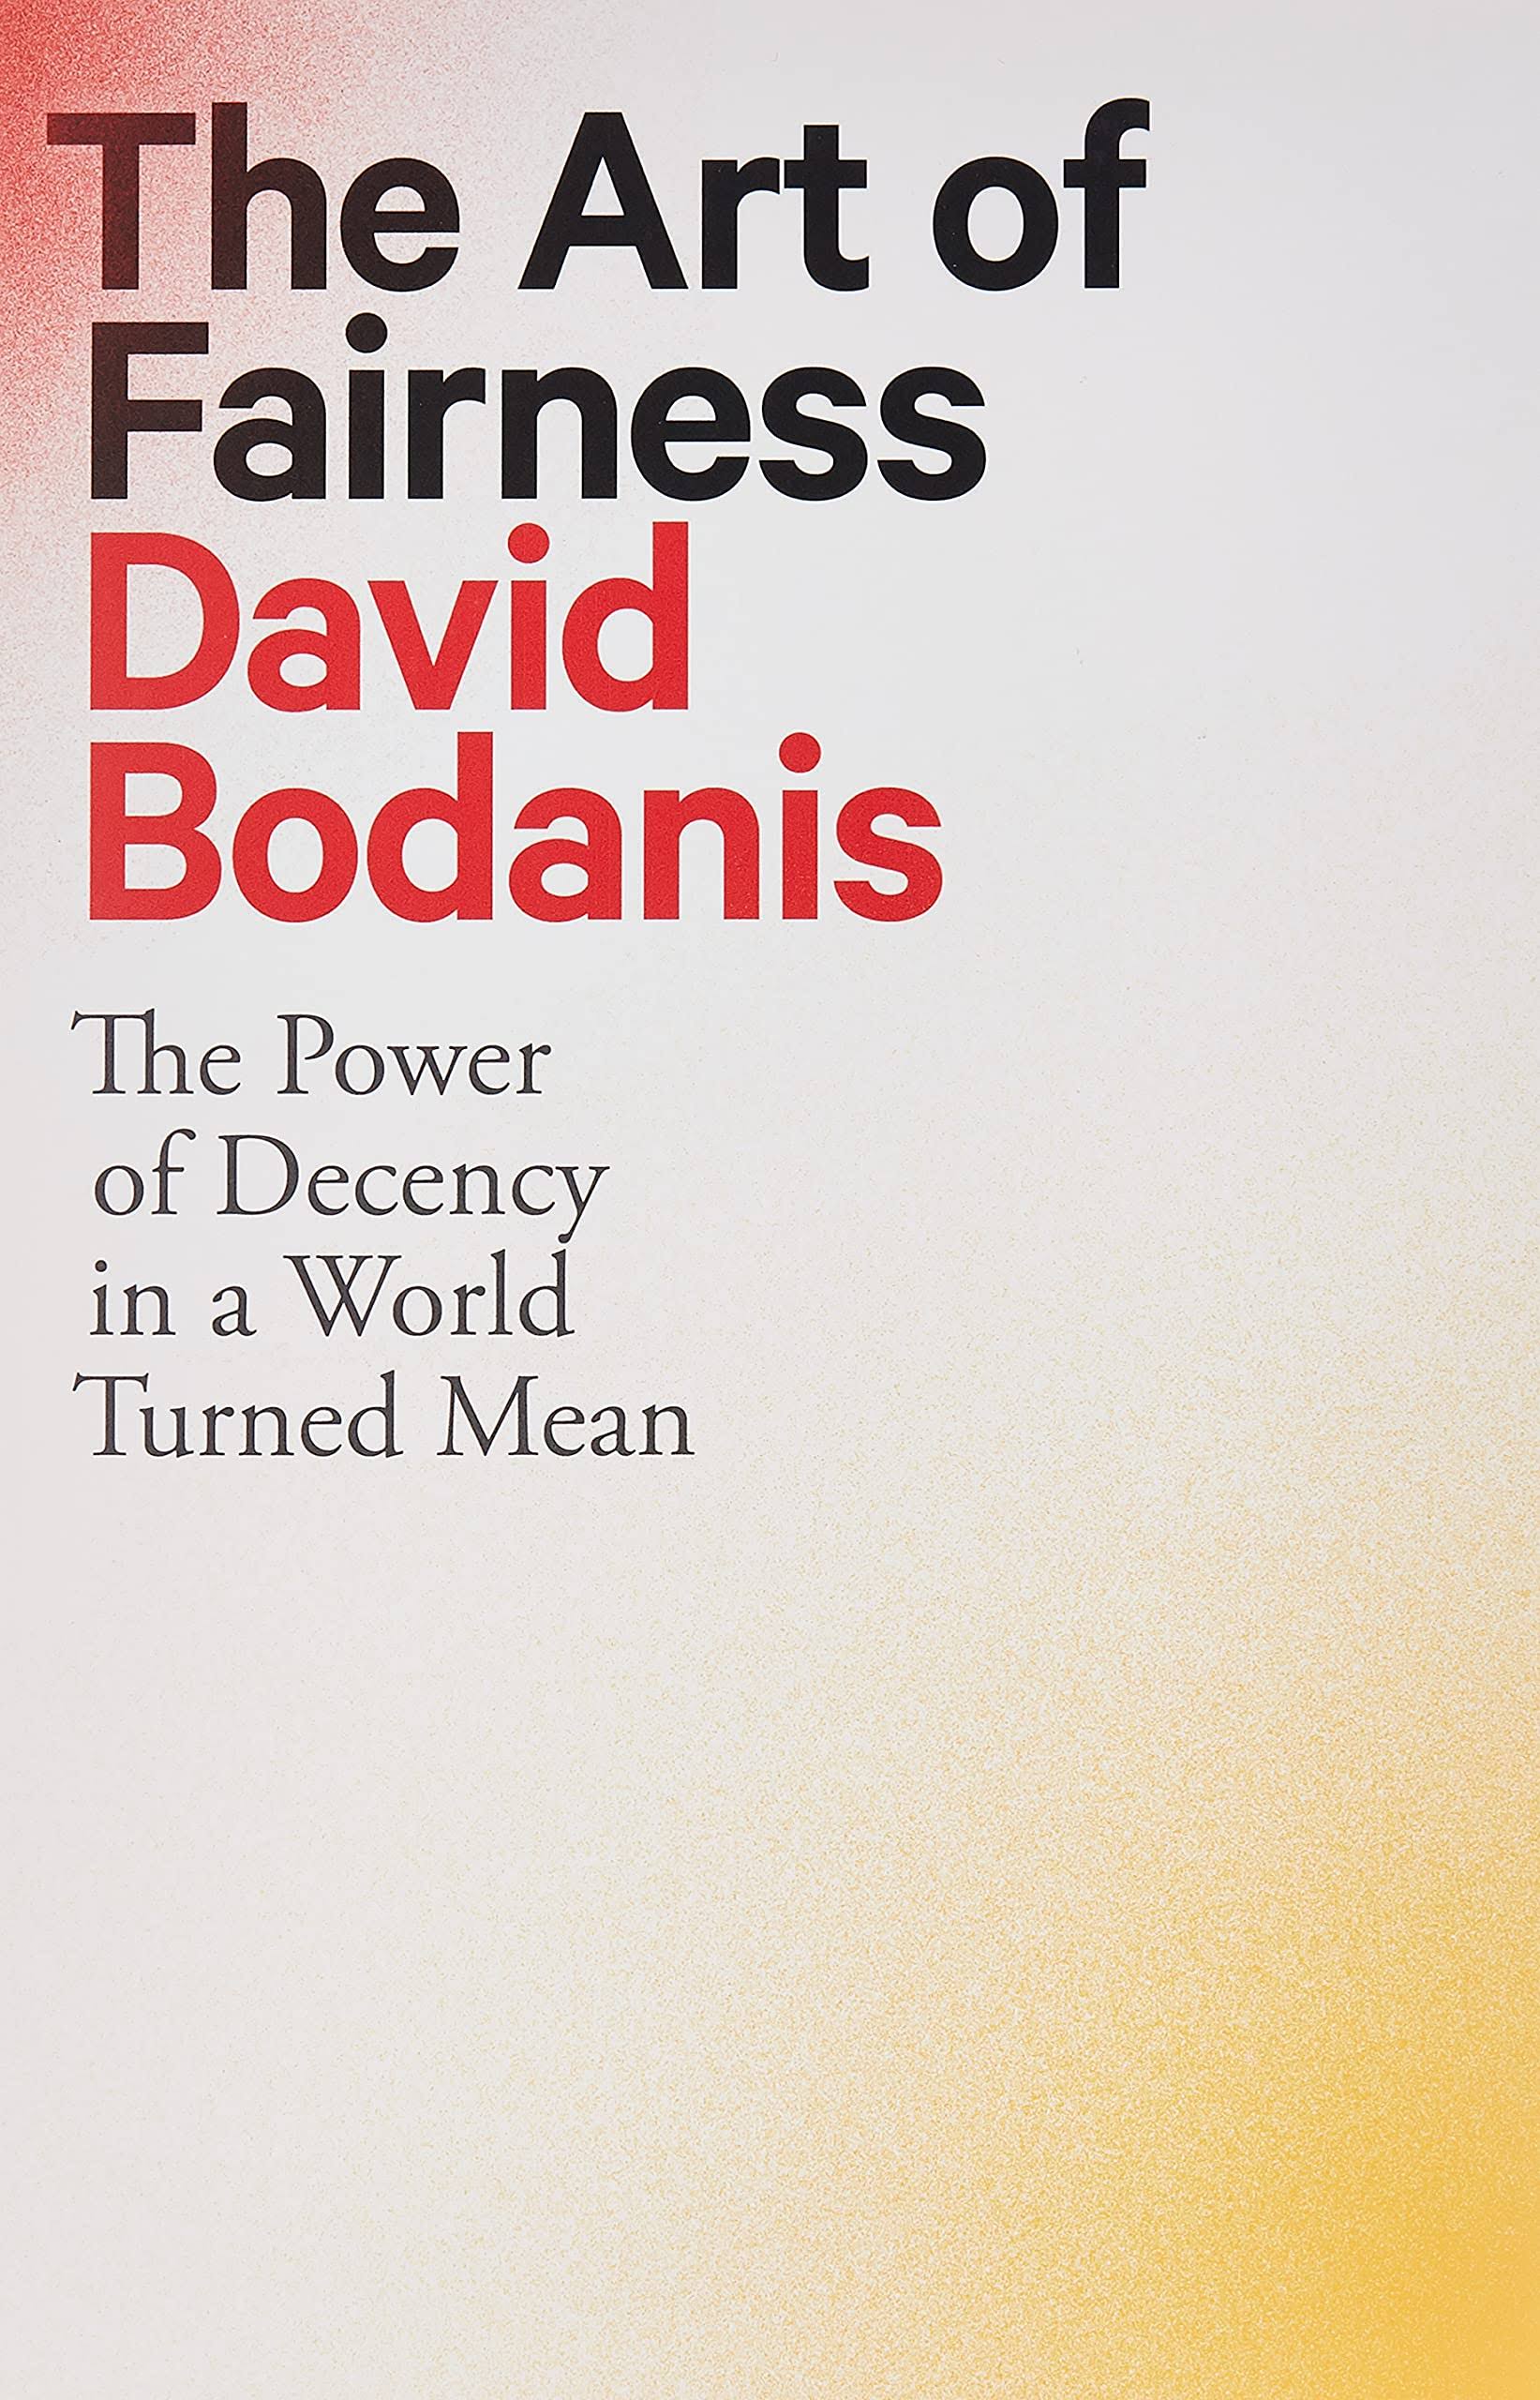 The Art of Fairness by David Bodanis